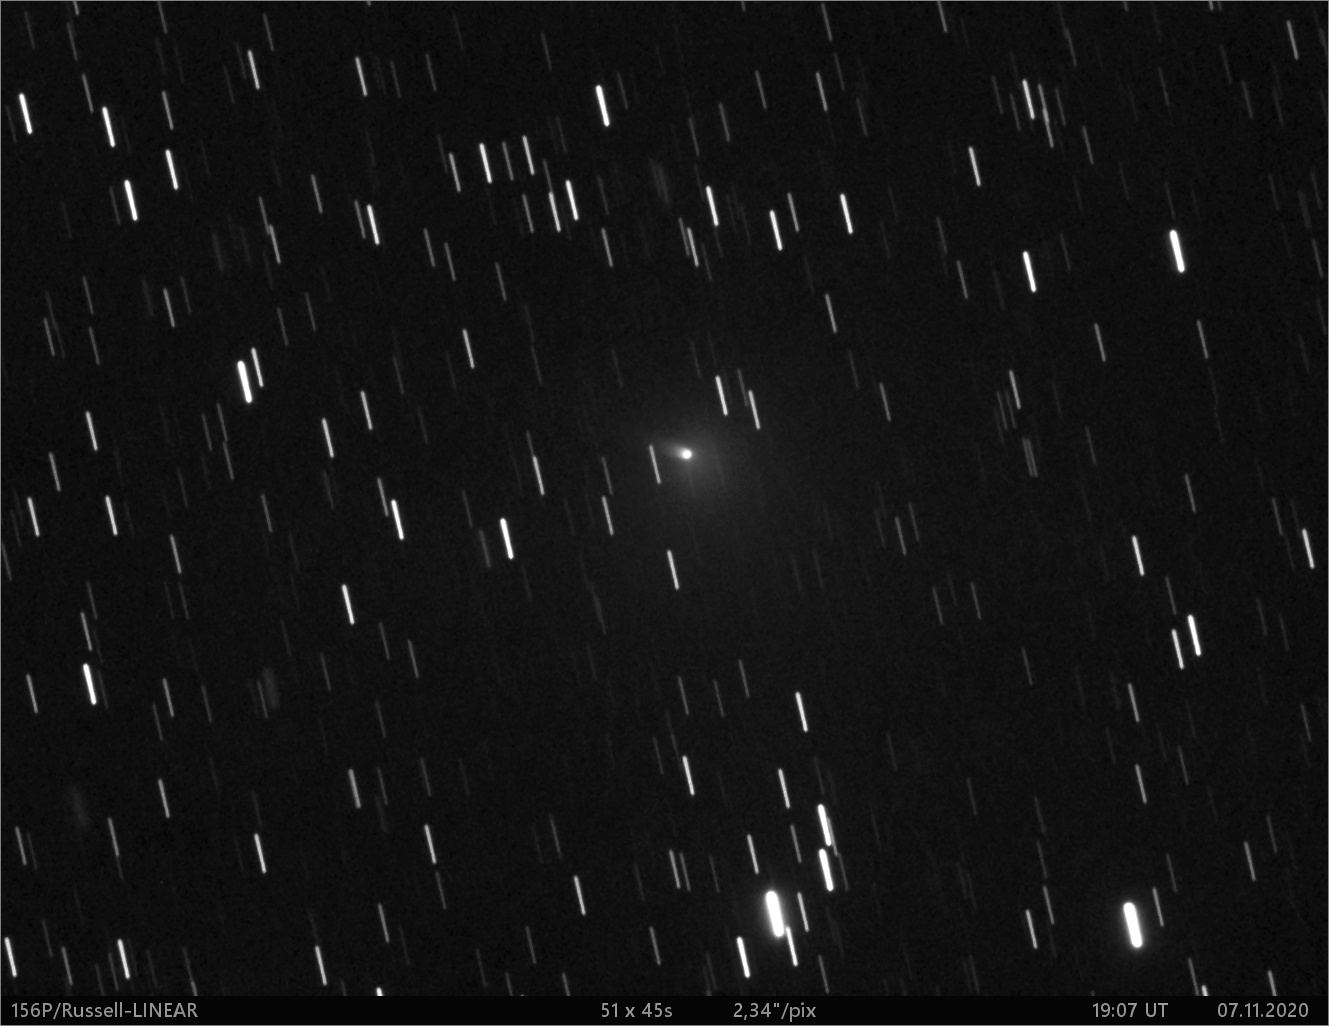 kometa 156P/Russell-LINEAR